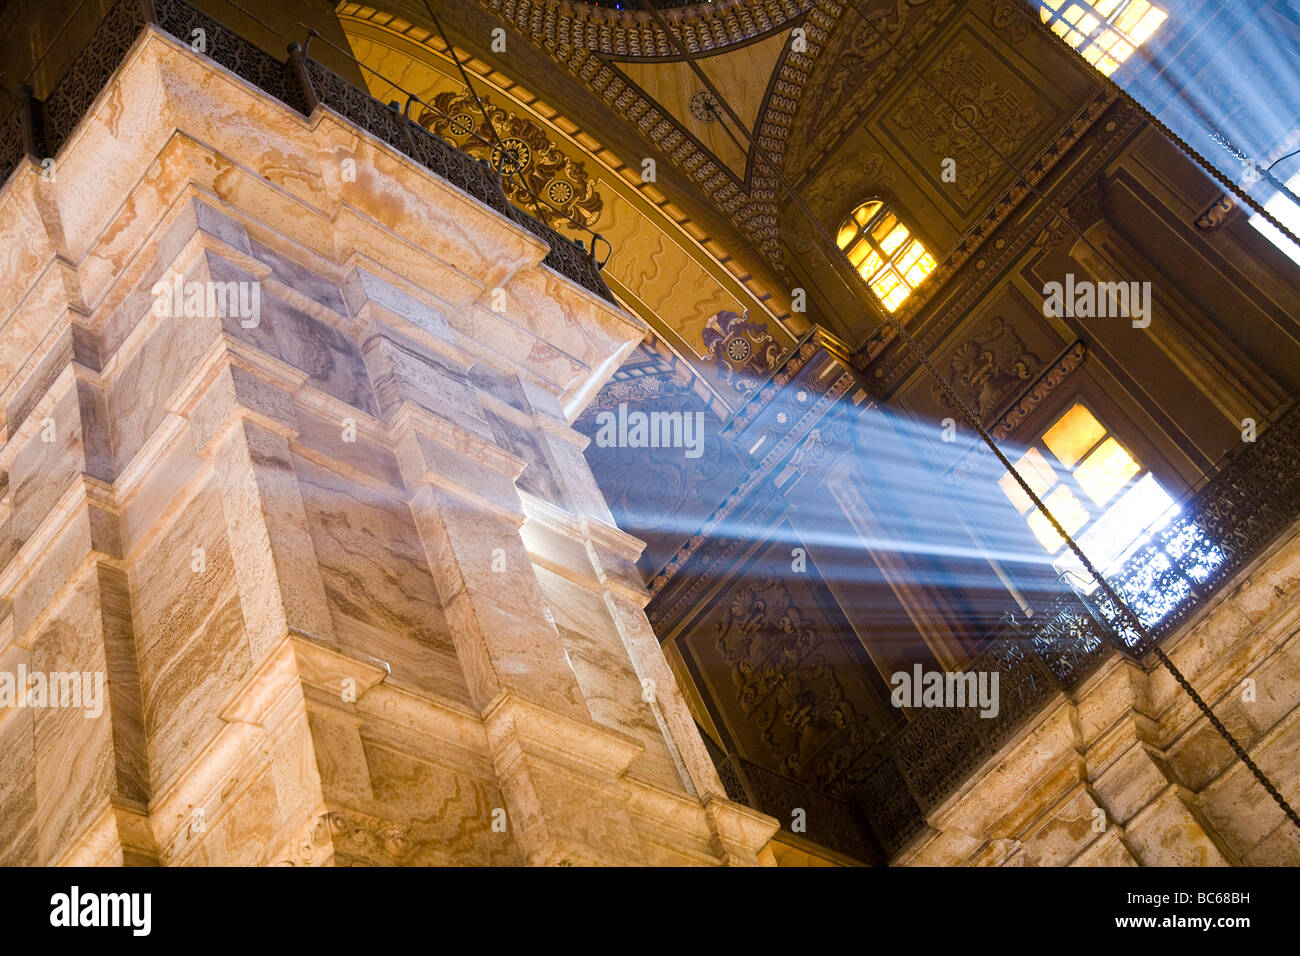 Fenster "" Ray of Light, Marmor, Ägypten, Moschee, Moschee von Muhammad Ali, frühen neunzehnten Jahrhundert, Cario Zitadelle, Piller, Licht Stockfoto